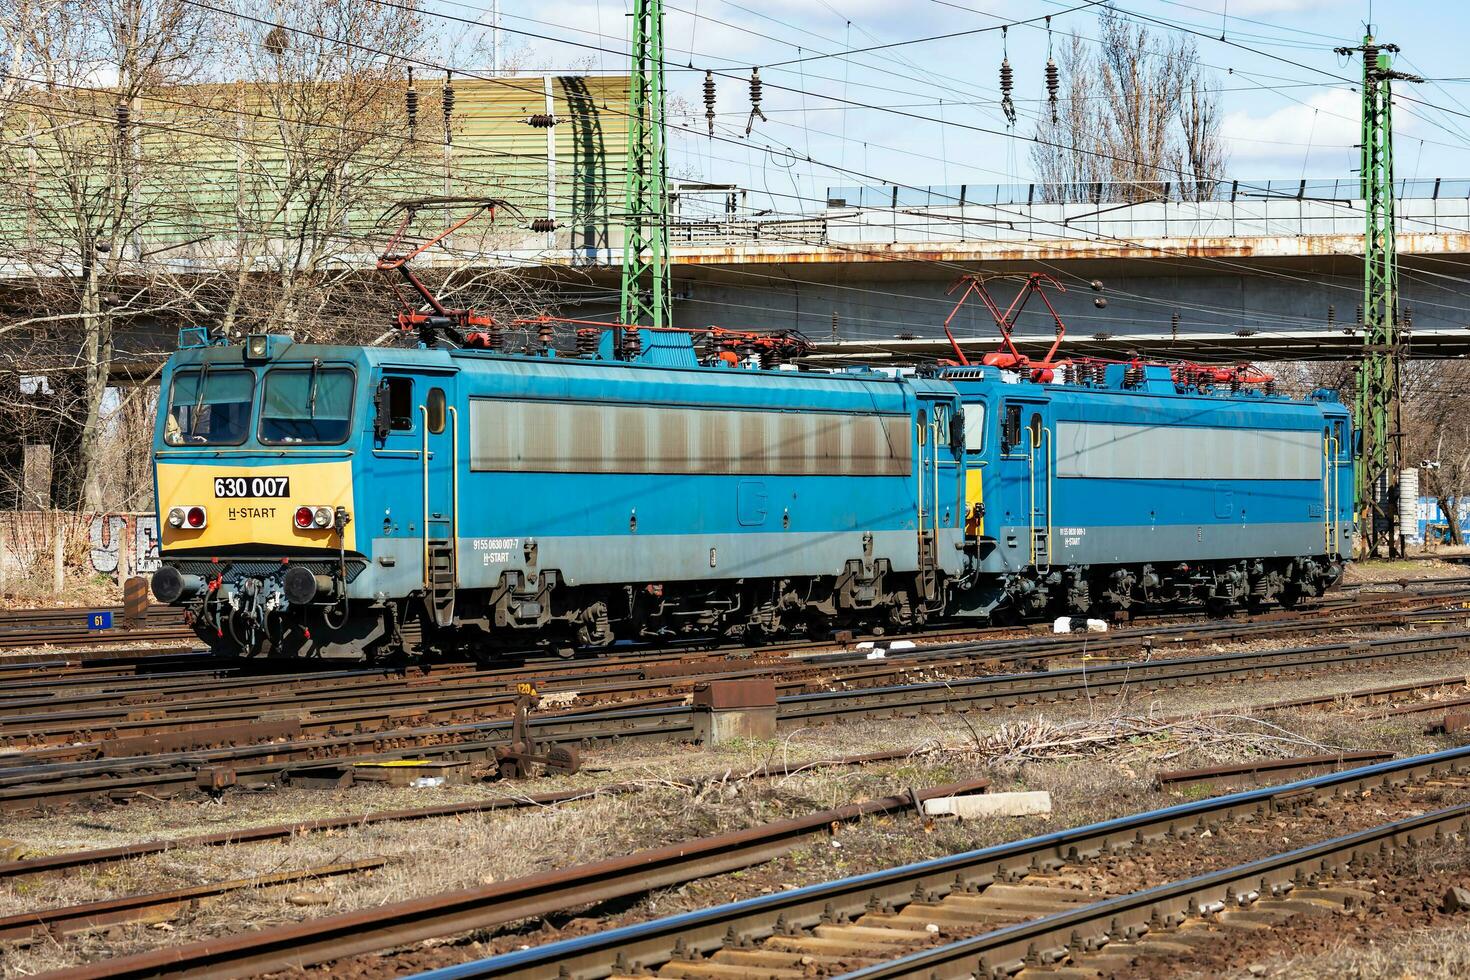 International Zug Transport. Lokomotive Zug beim Bahnhof. global Eisenbahn Transport und Versand. foto